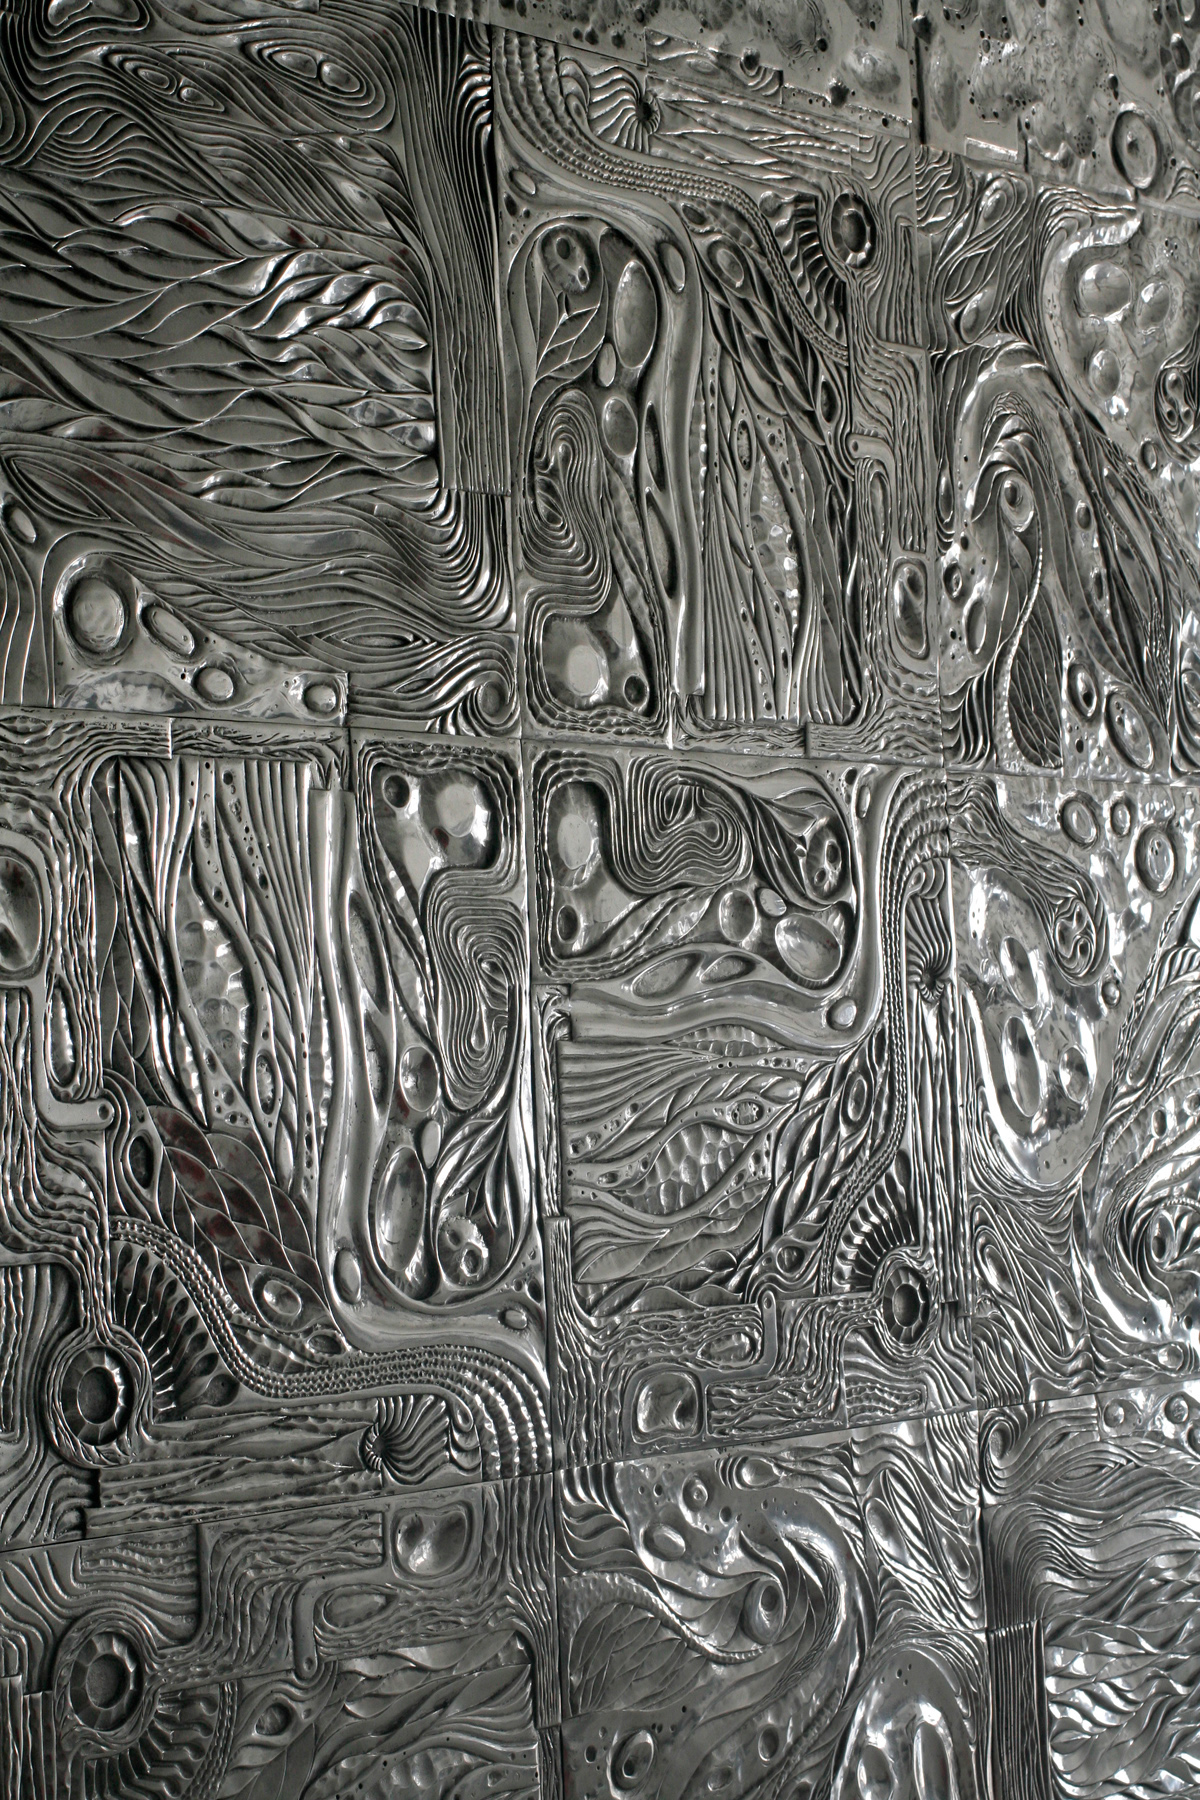 sculpture arts Mural wall tiles metal aluminium RECYCLED organic modern